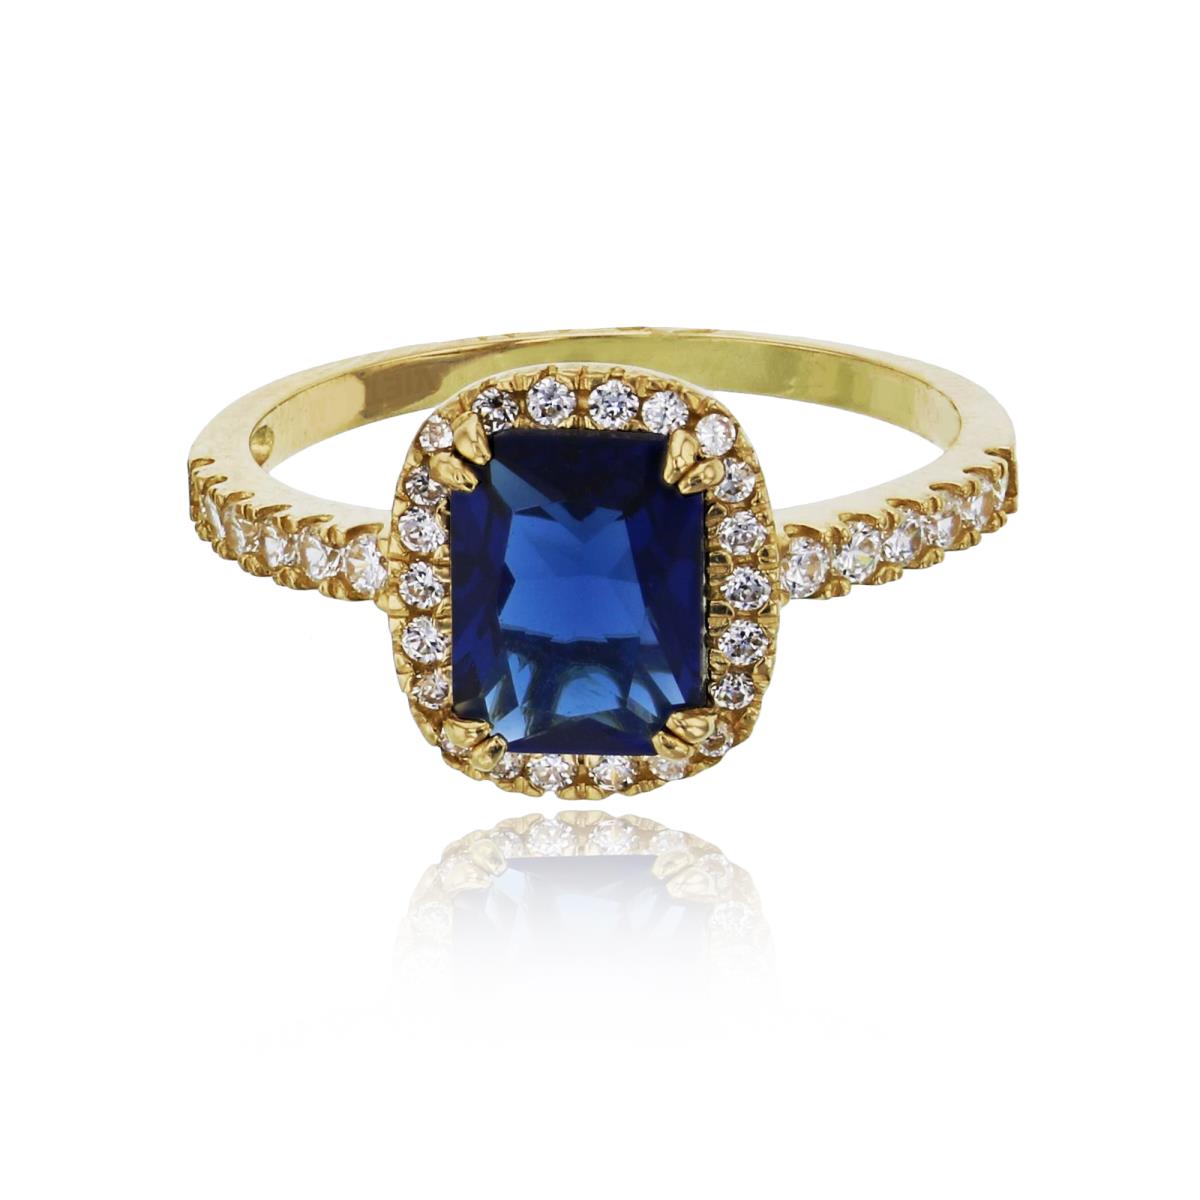 10K Yellow Gold 8x5mm Sapphire Emerald Cut & White CZ Halo Fashion Ring